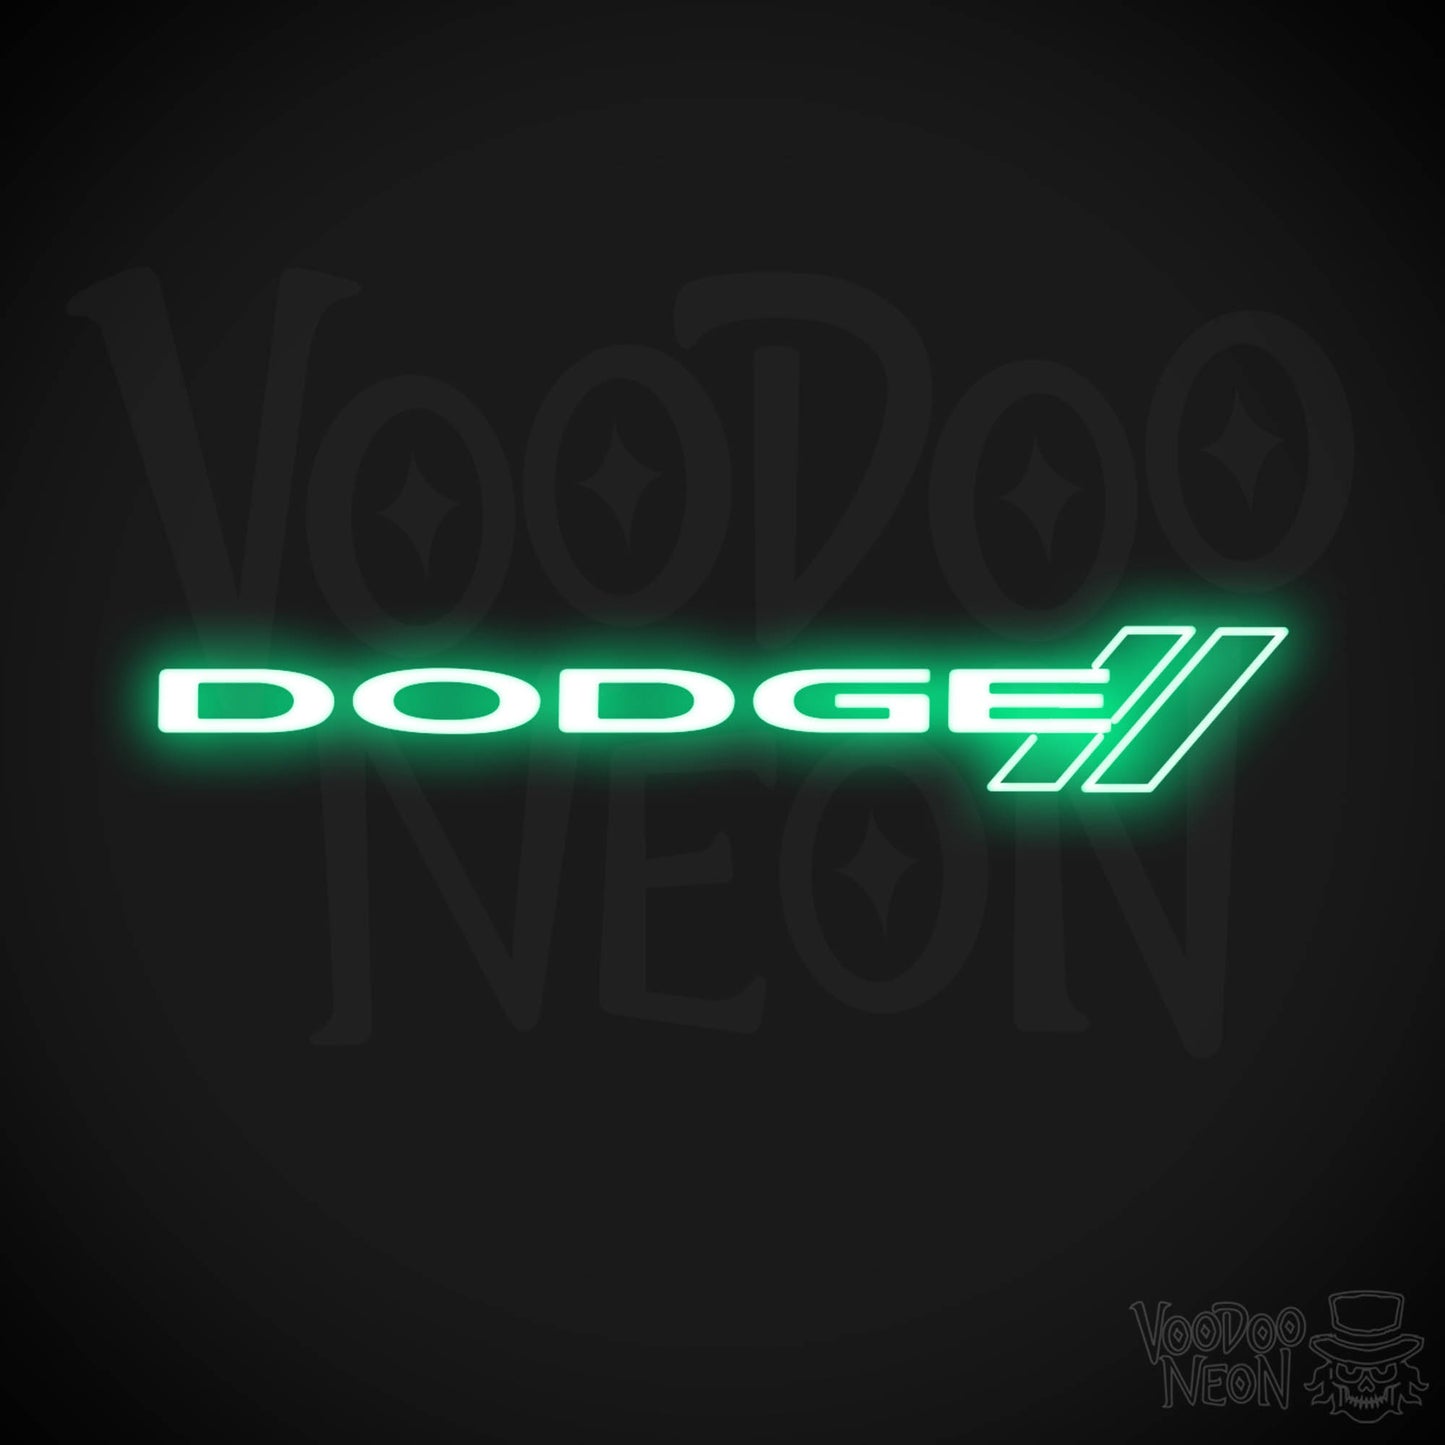 Dodge Neon Sign - Dodge Sign - Dodge Decor - Wall Art - Color Green